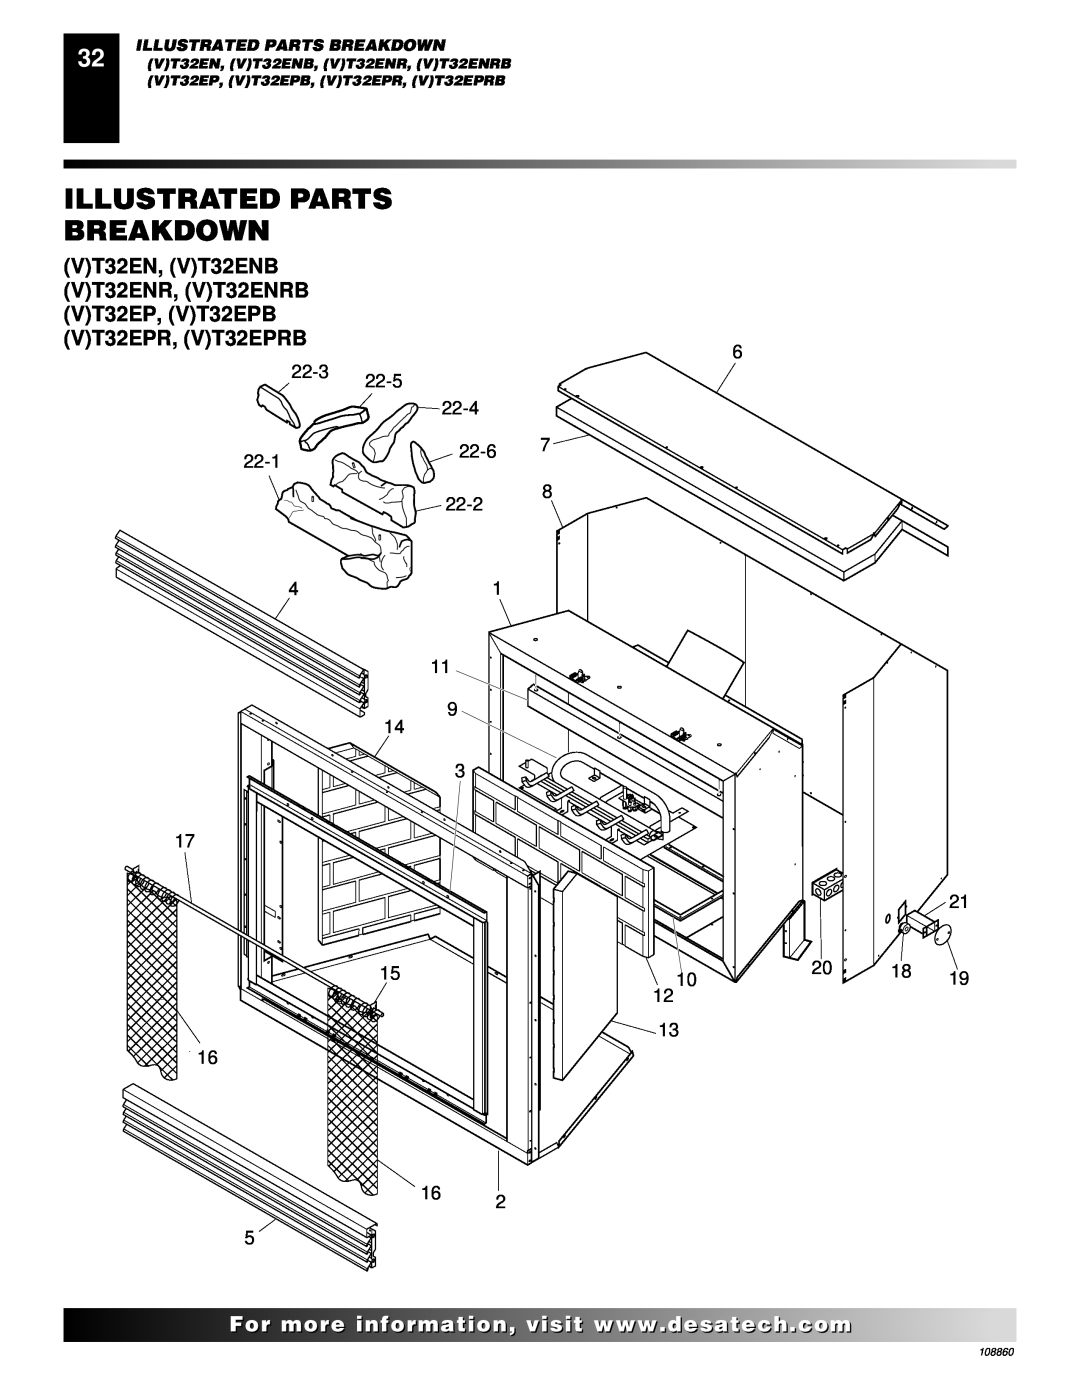 Desa (V)T32EP, (V)T36EP SERIES, (V)T36EN SERIES, V)T32EN installation manual Illustrated Parts Breakdown 